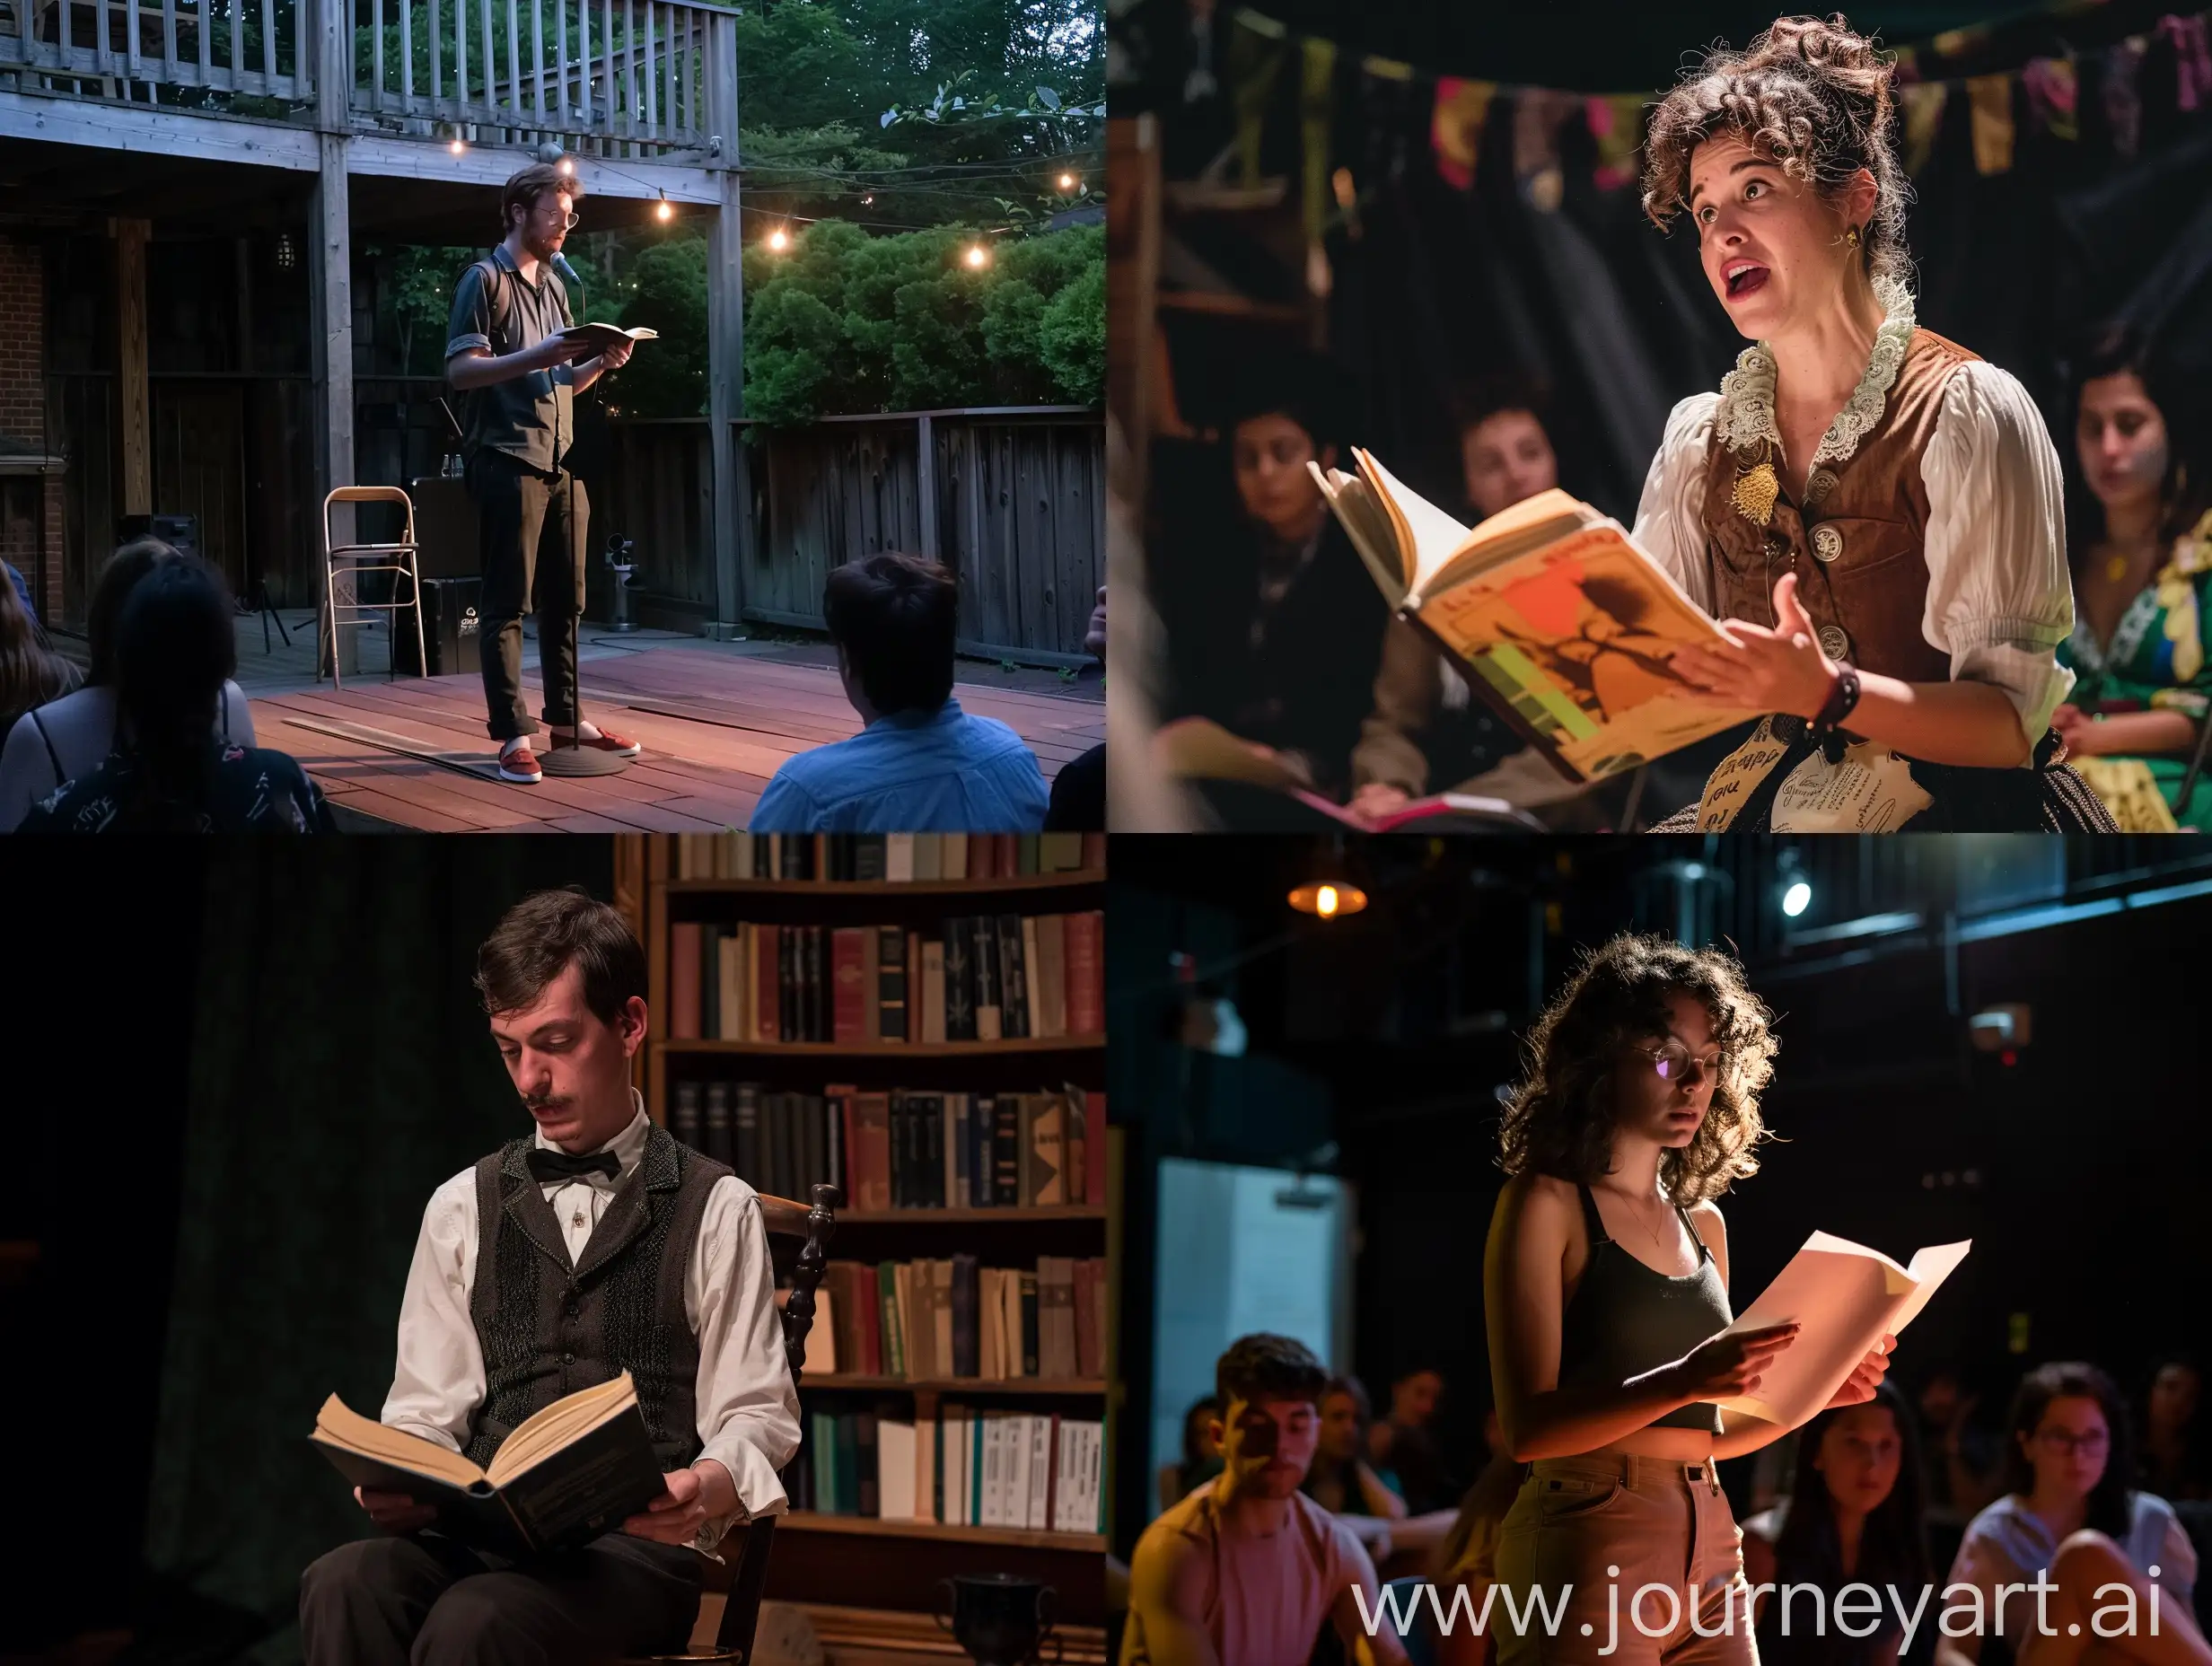 Joyful-Literary-Performance-on-June-1st